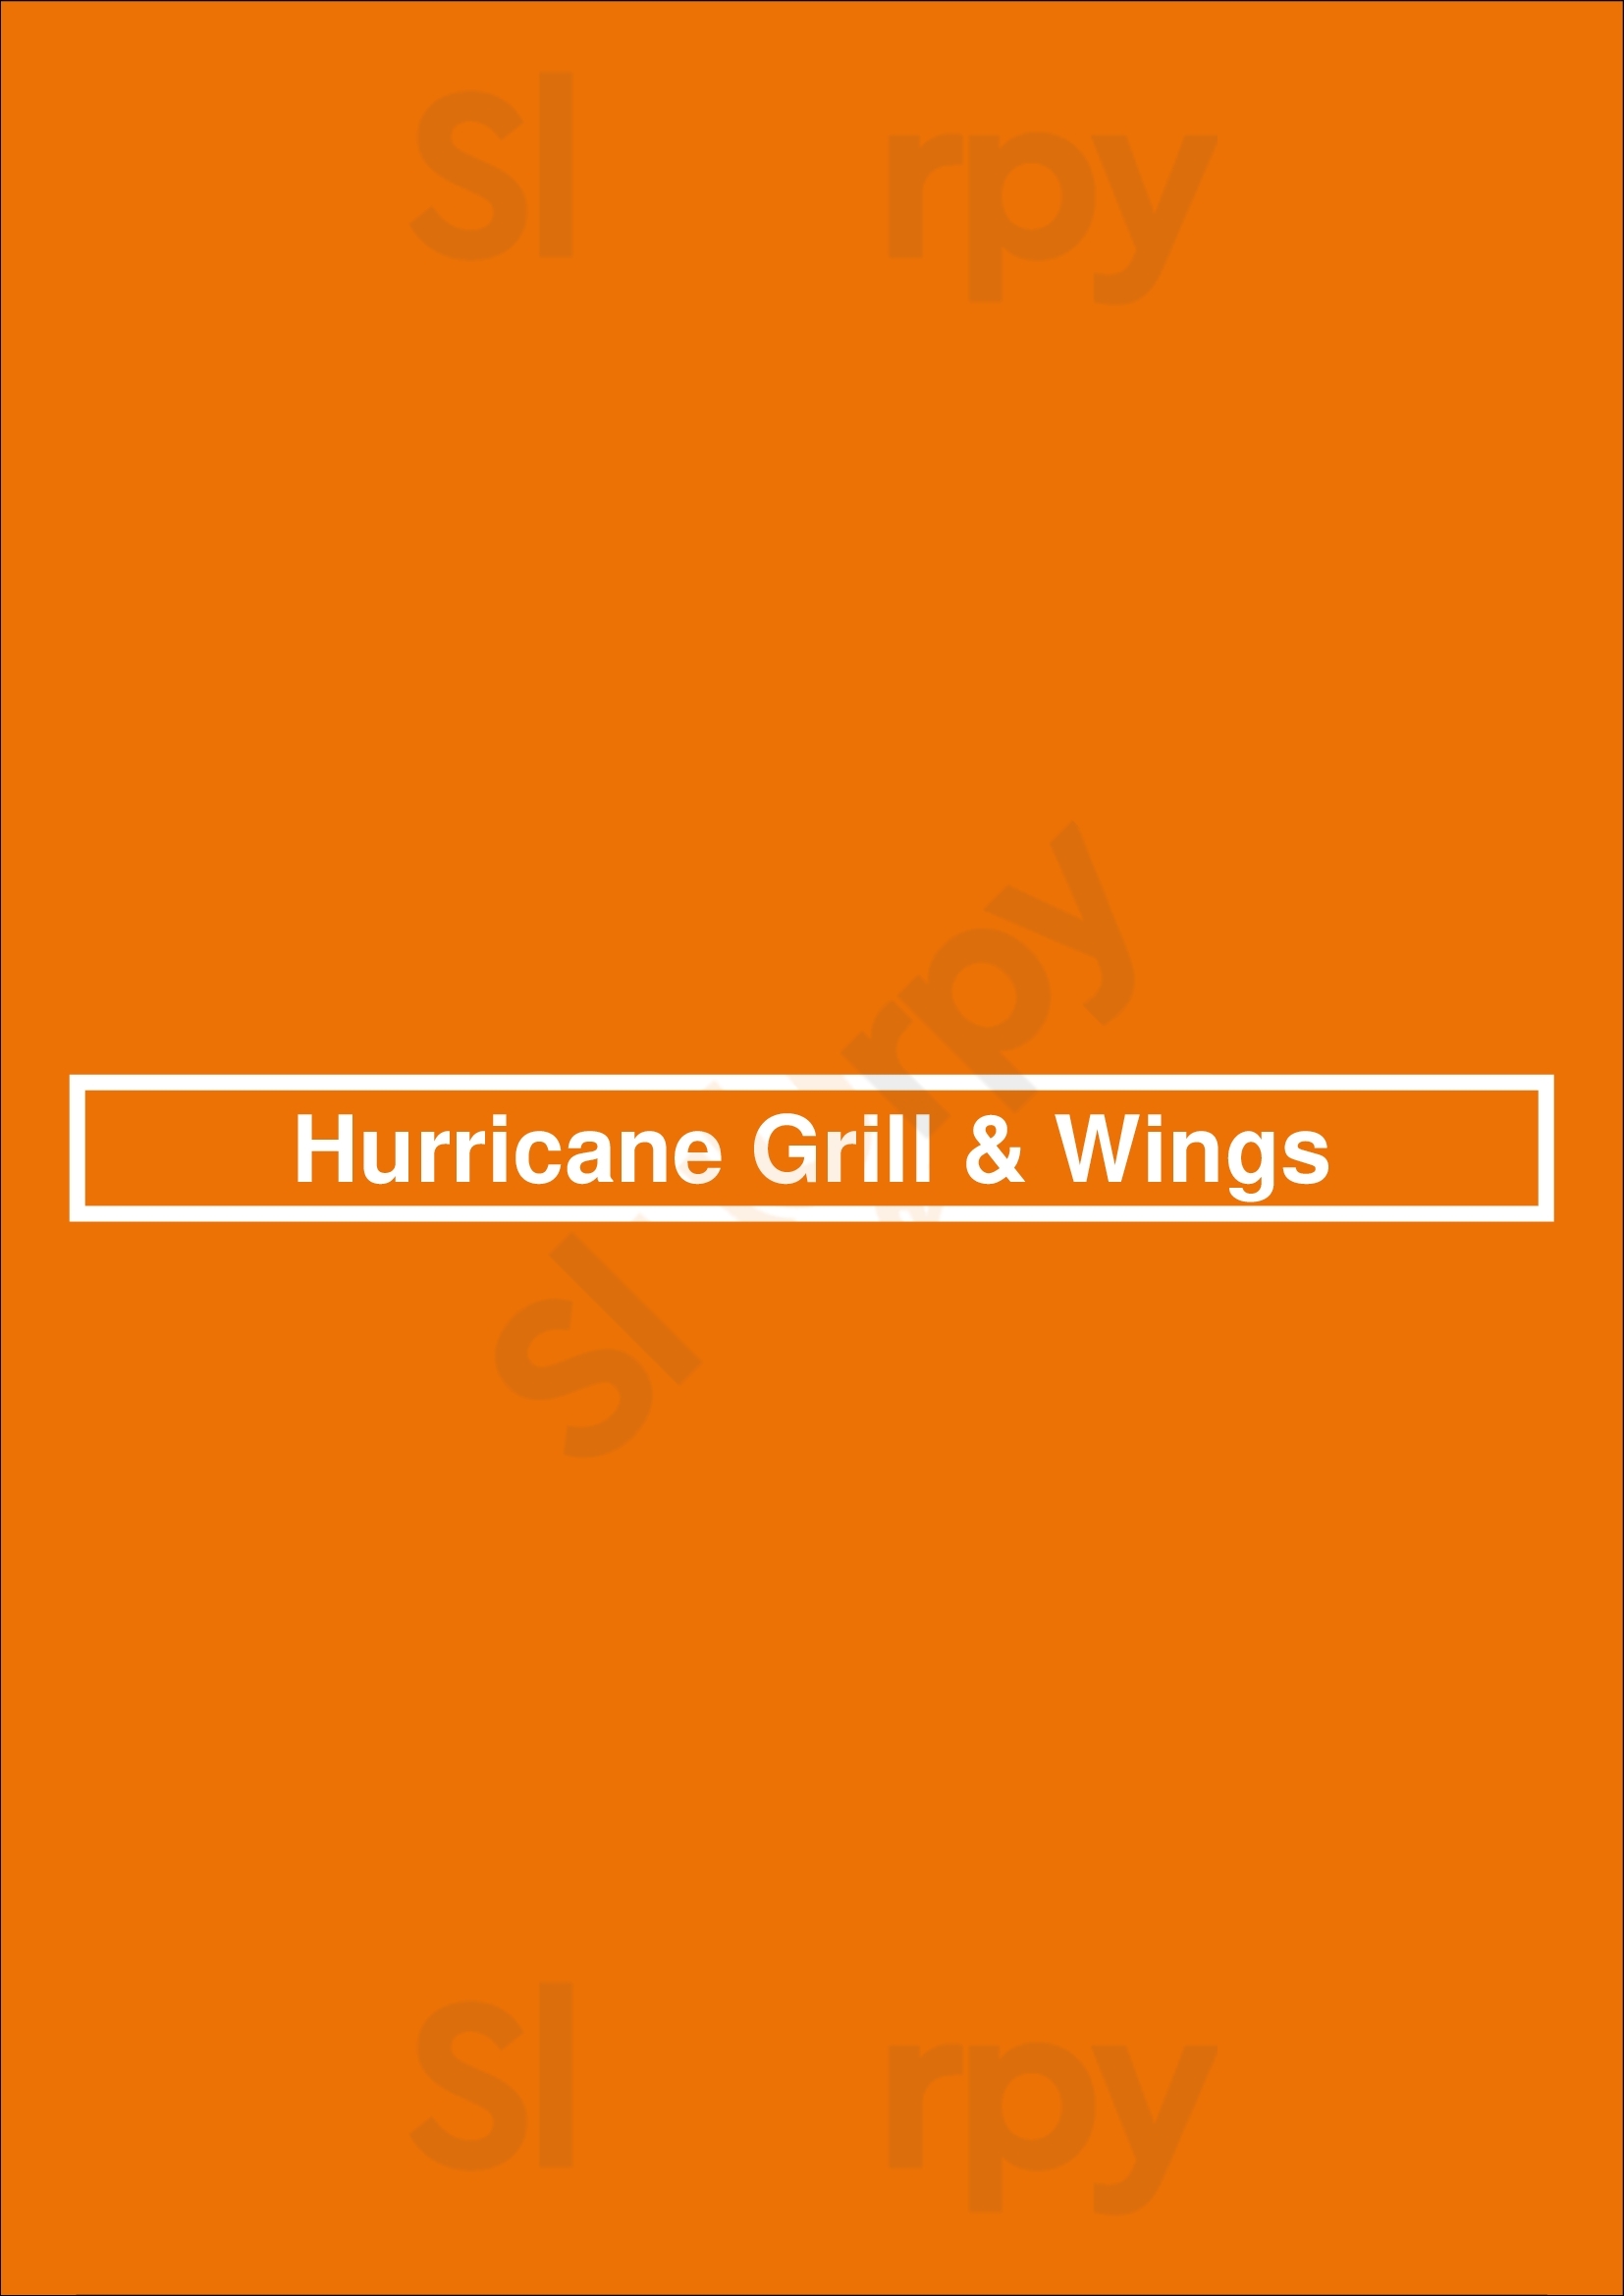 Hurricane Grill & Wings Orlando Menu - 1